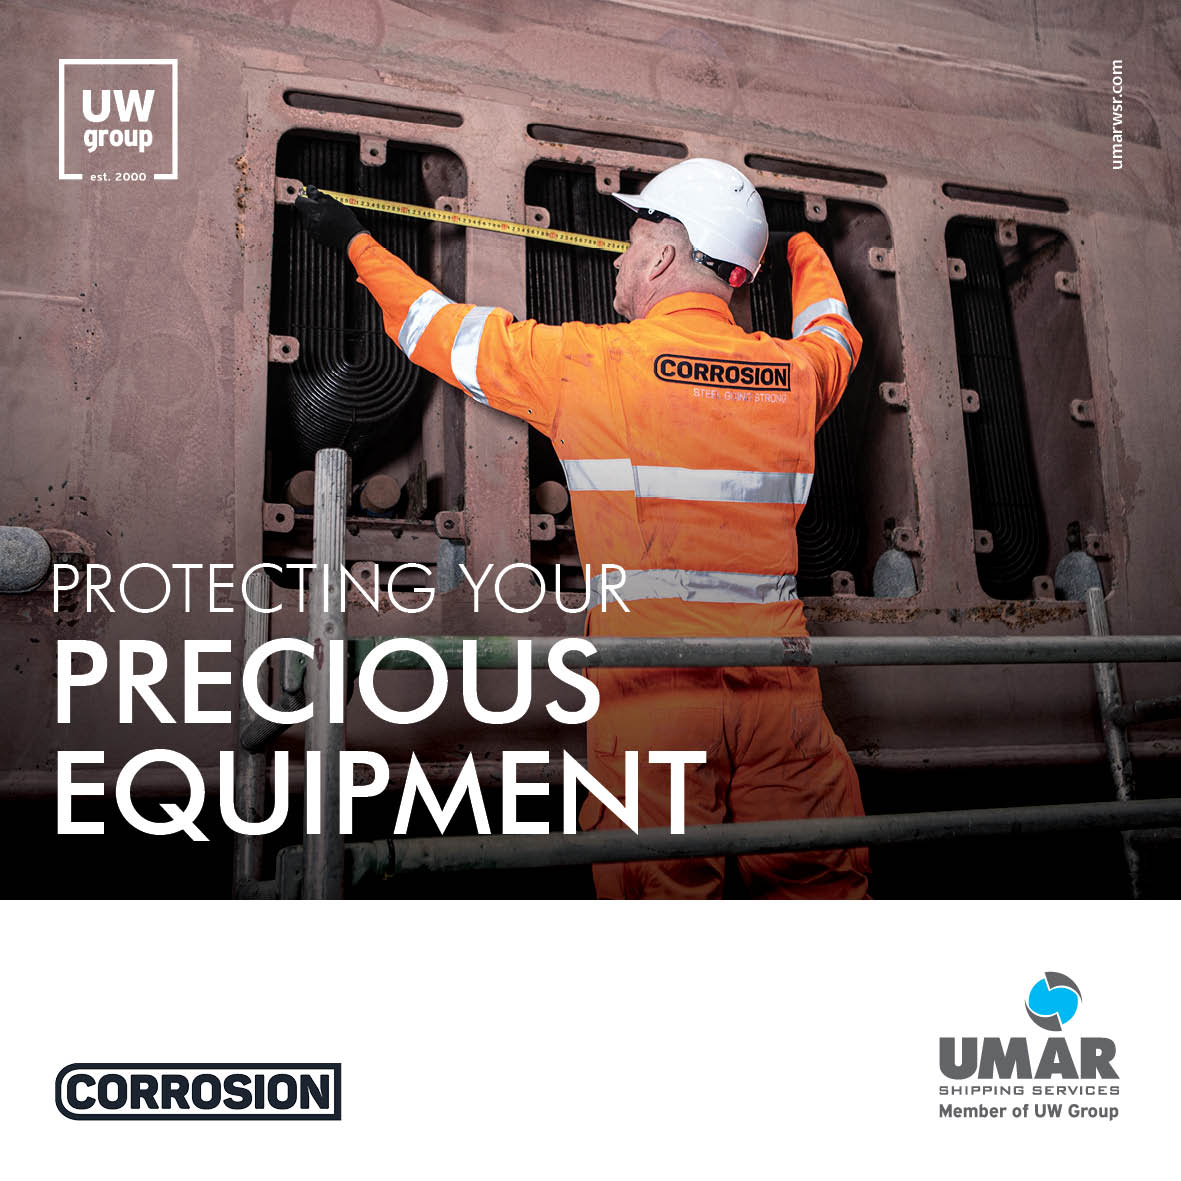 ⚙️Corrosion has been defining excellence in maritime protection since 1993.
🌐Learn more: umarwsr.com/portfolio-item…

#UMARWSR #UWGroup #ShipRepairs #MarineEquipment